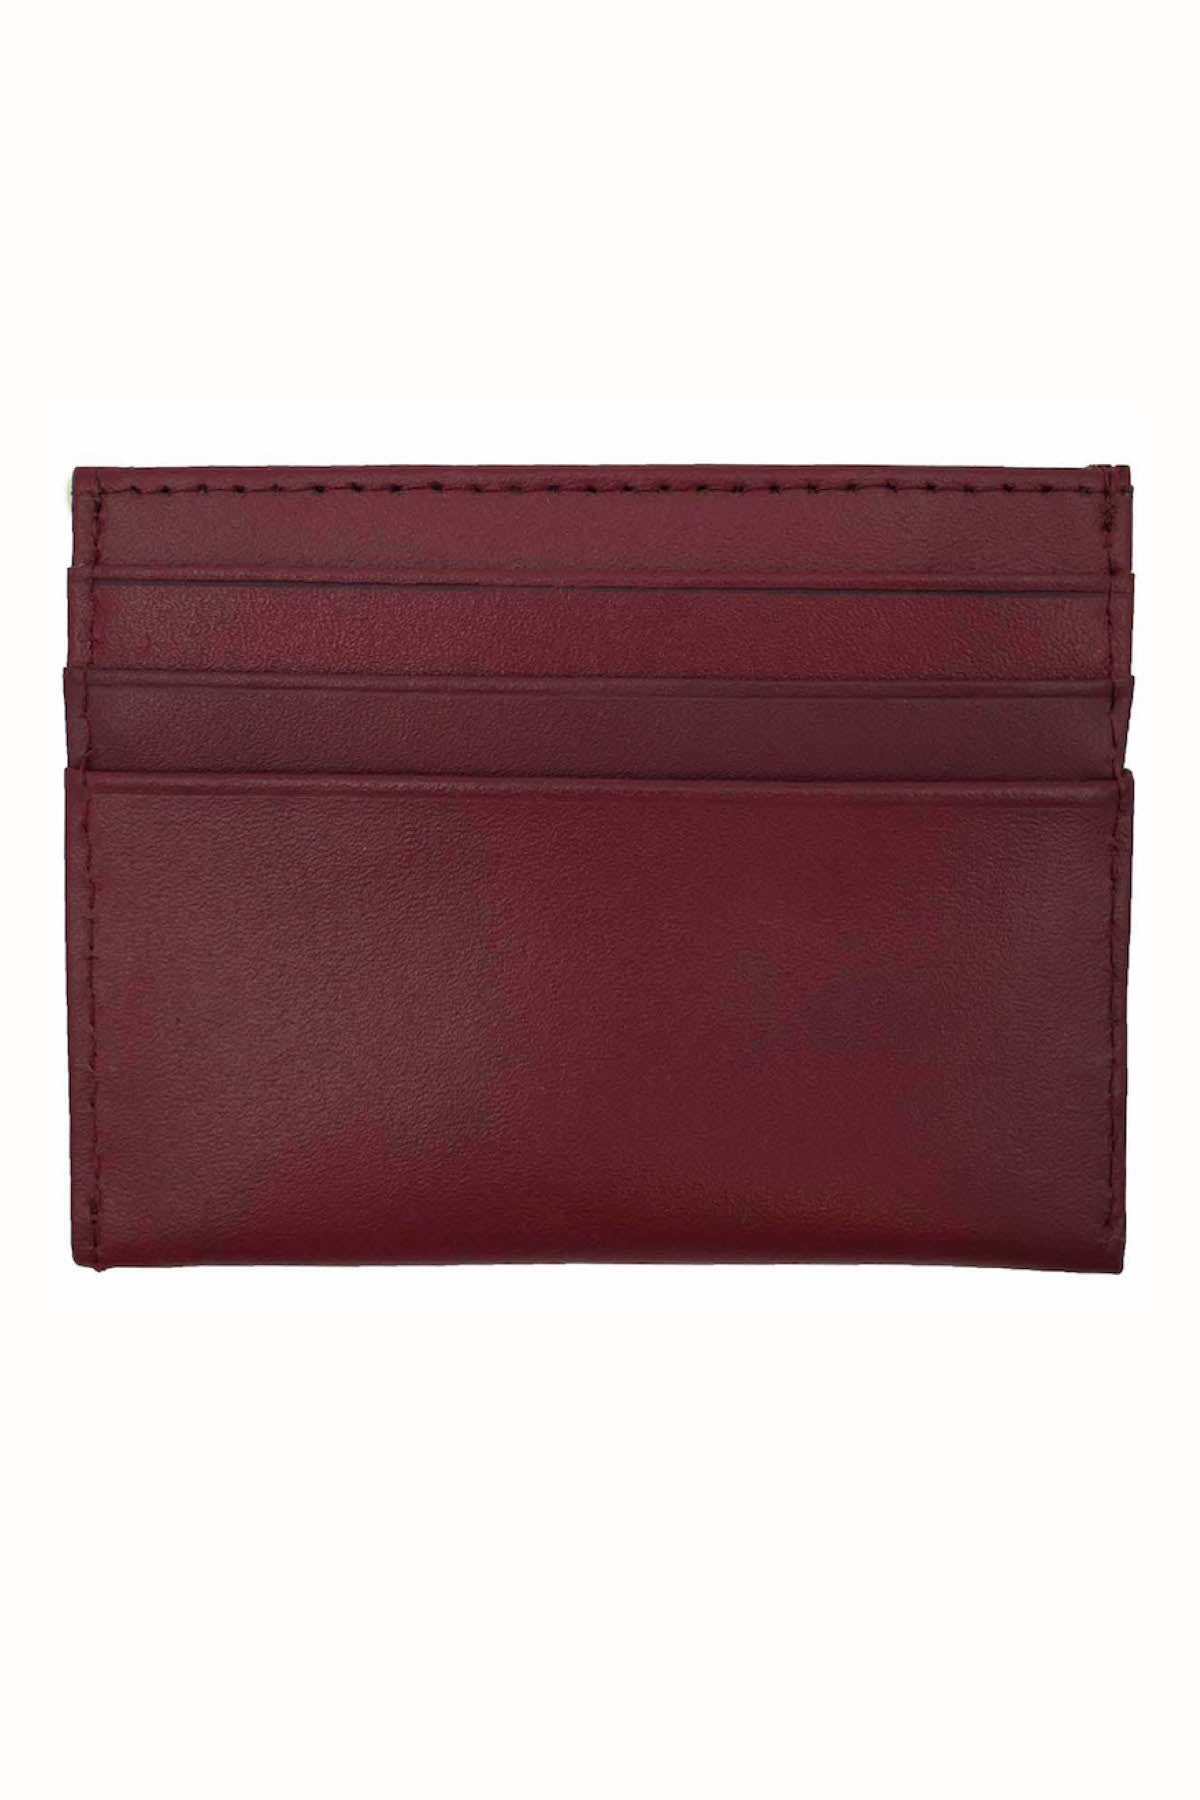 DIBI Plum Slim Leather Wallet